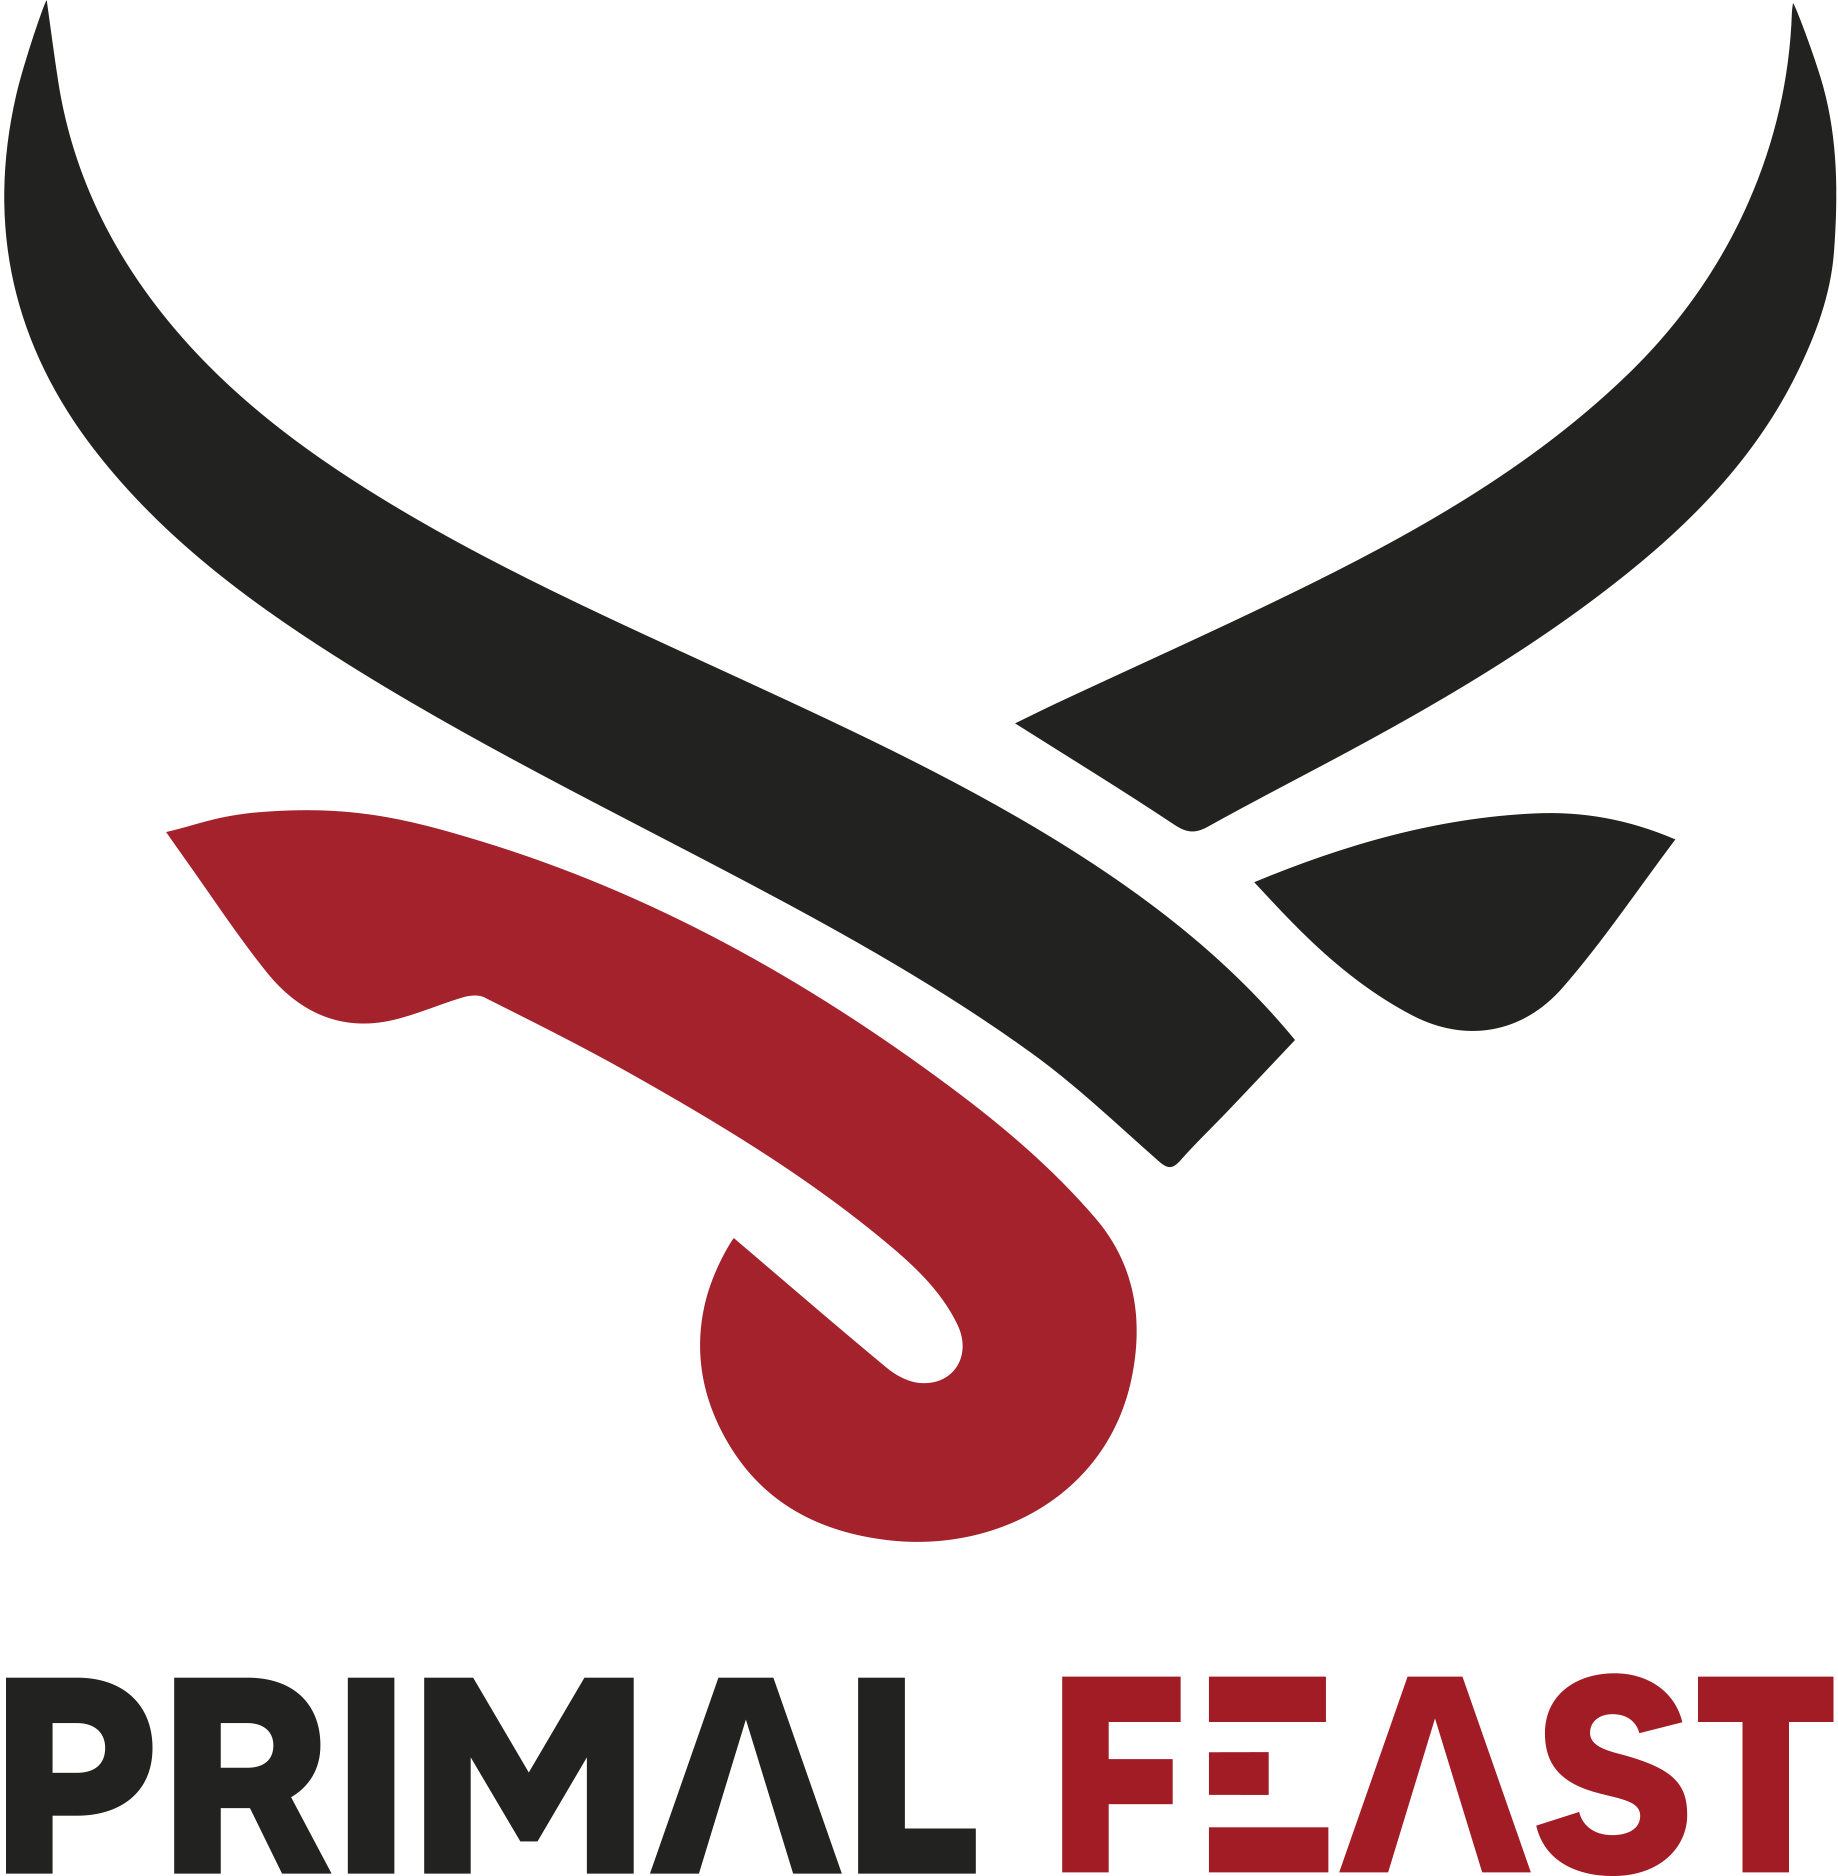 primal feast_logo_final_black red_RGB